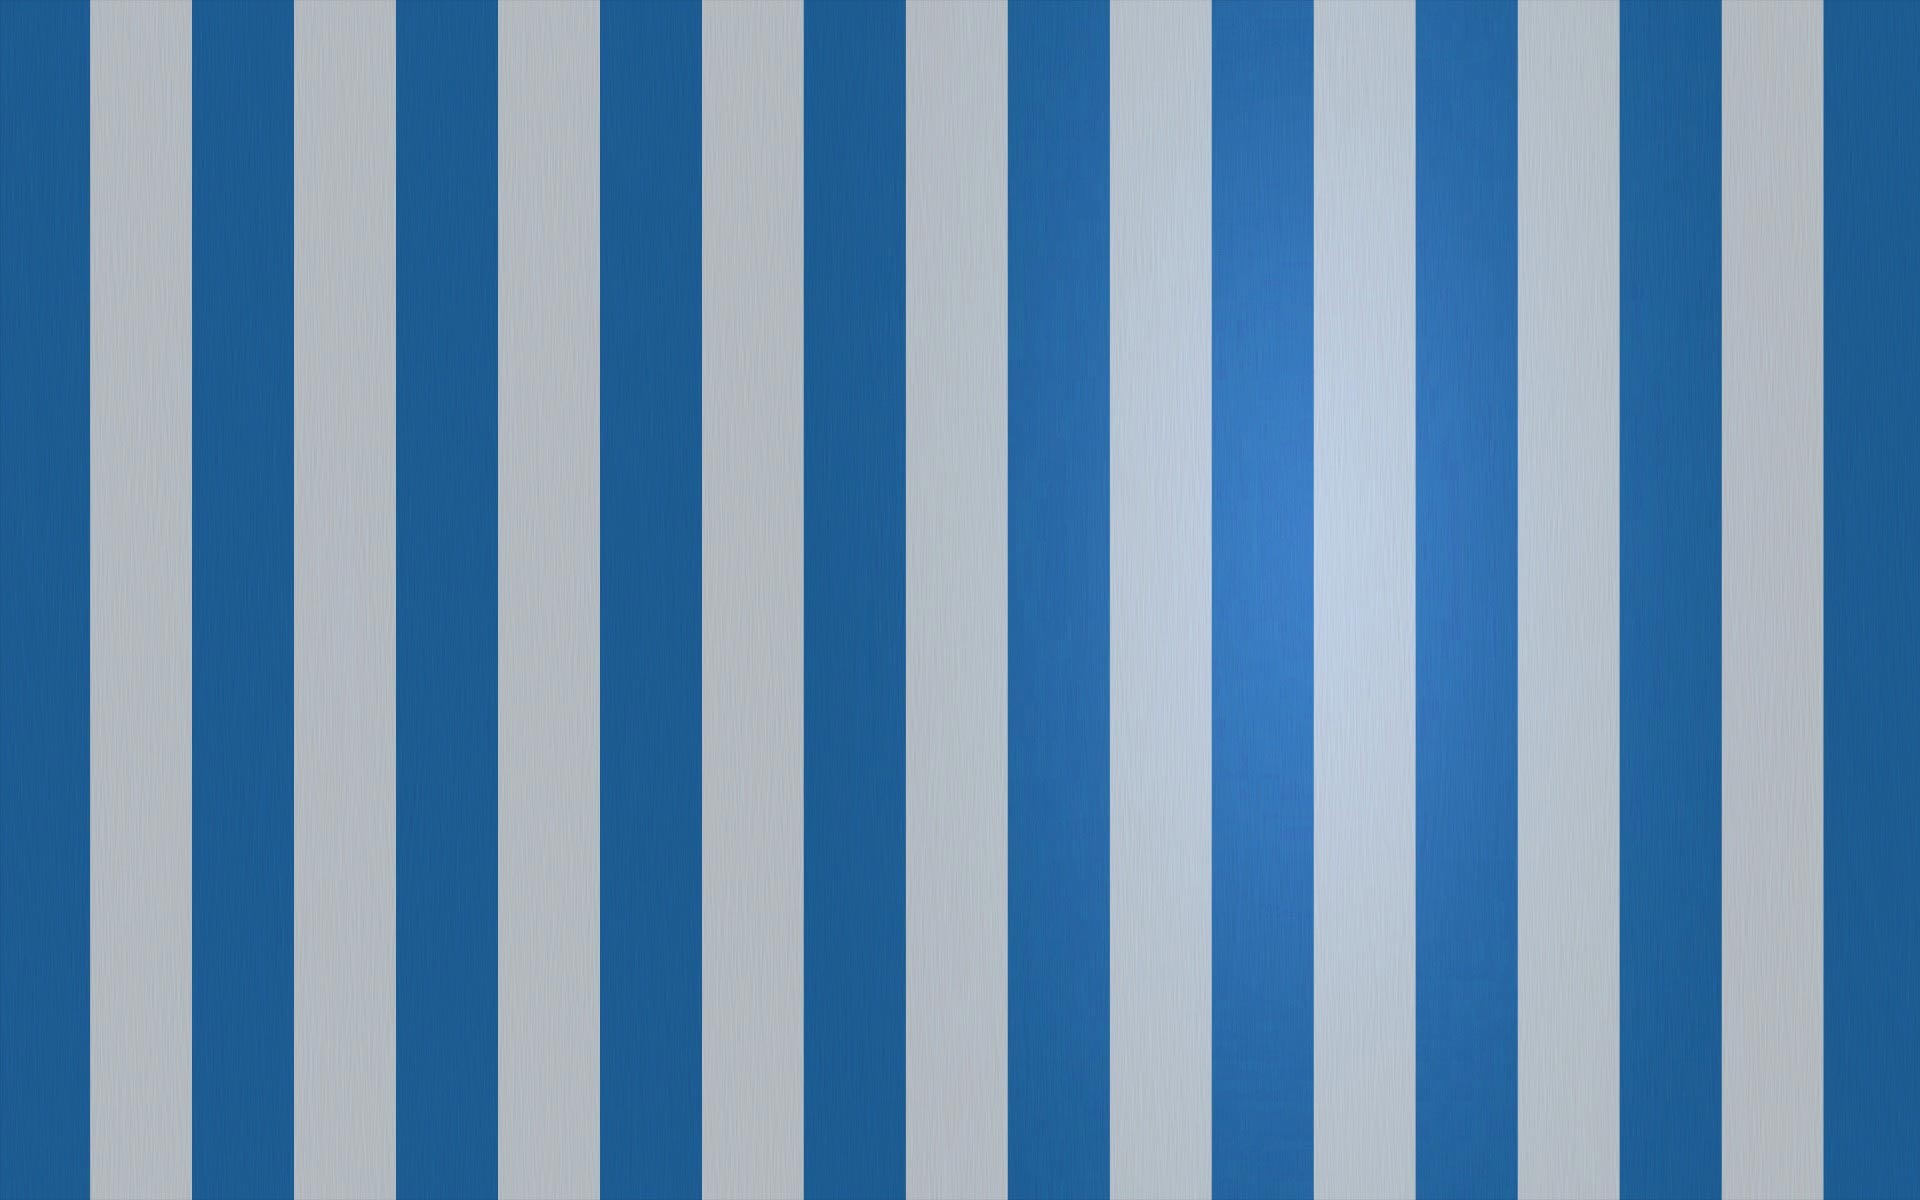 Classic Blue White Stripe Wallpaper Backdrop Stock Vector Royalty Free  584181412  Shutterstock